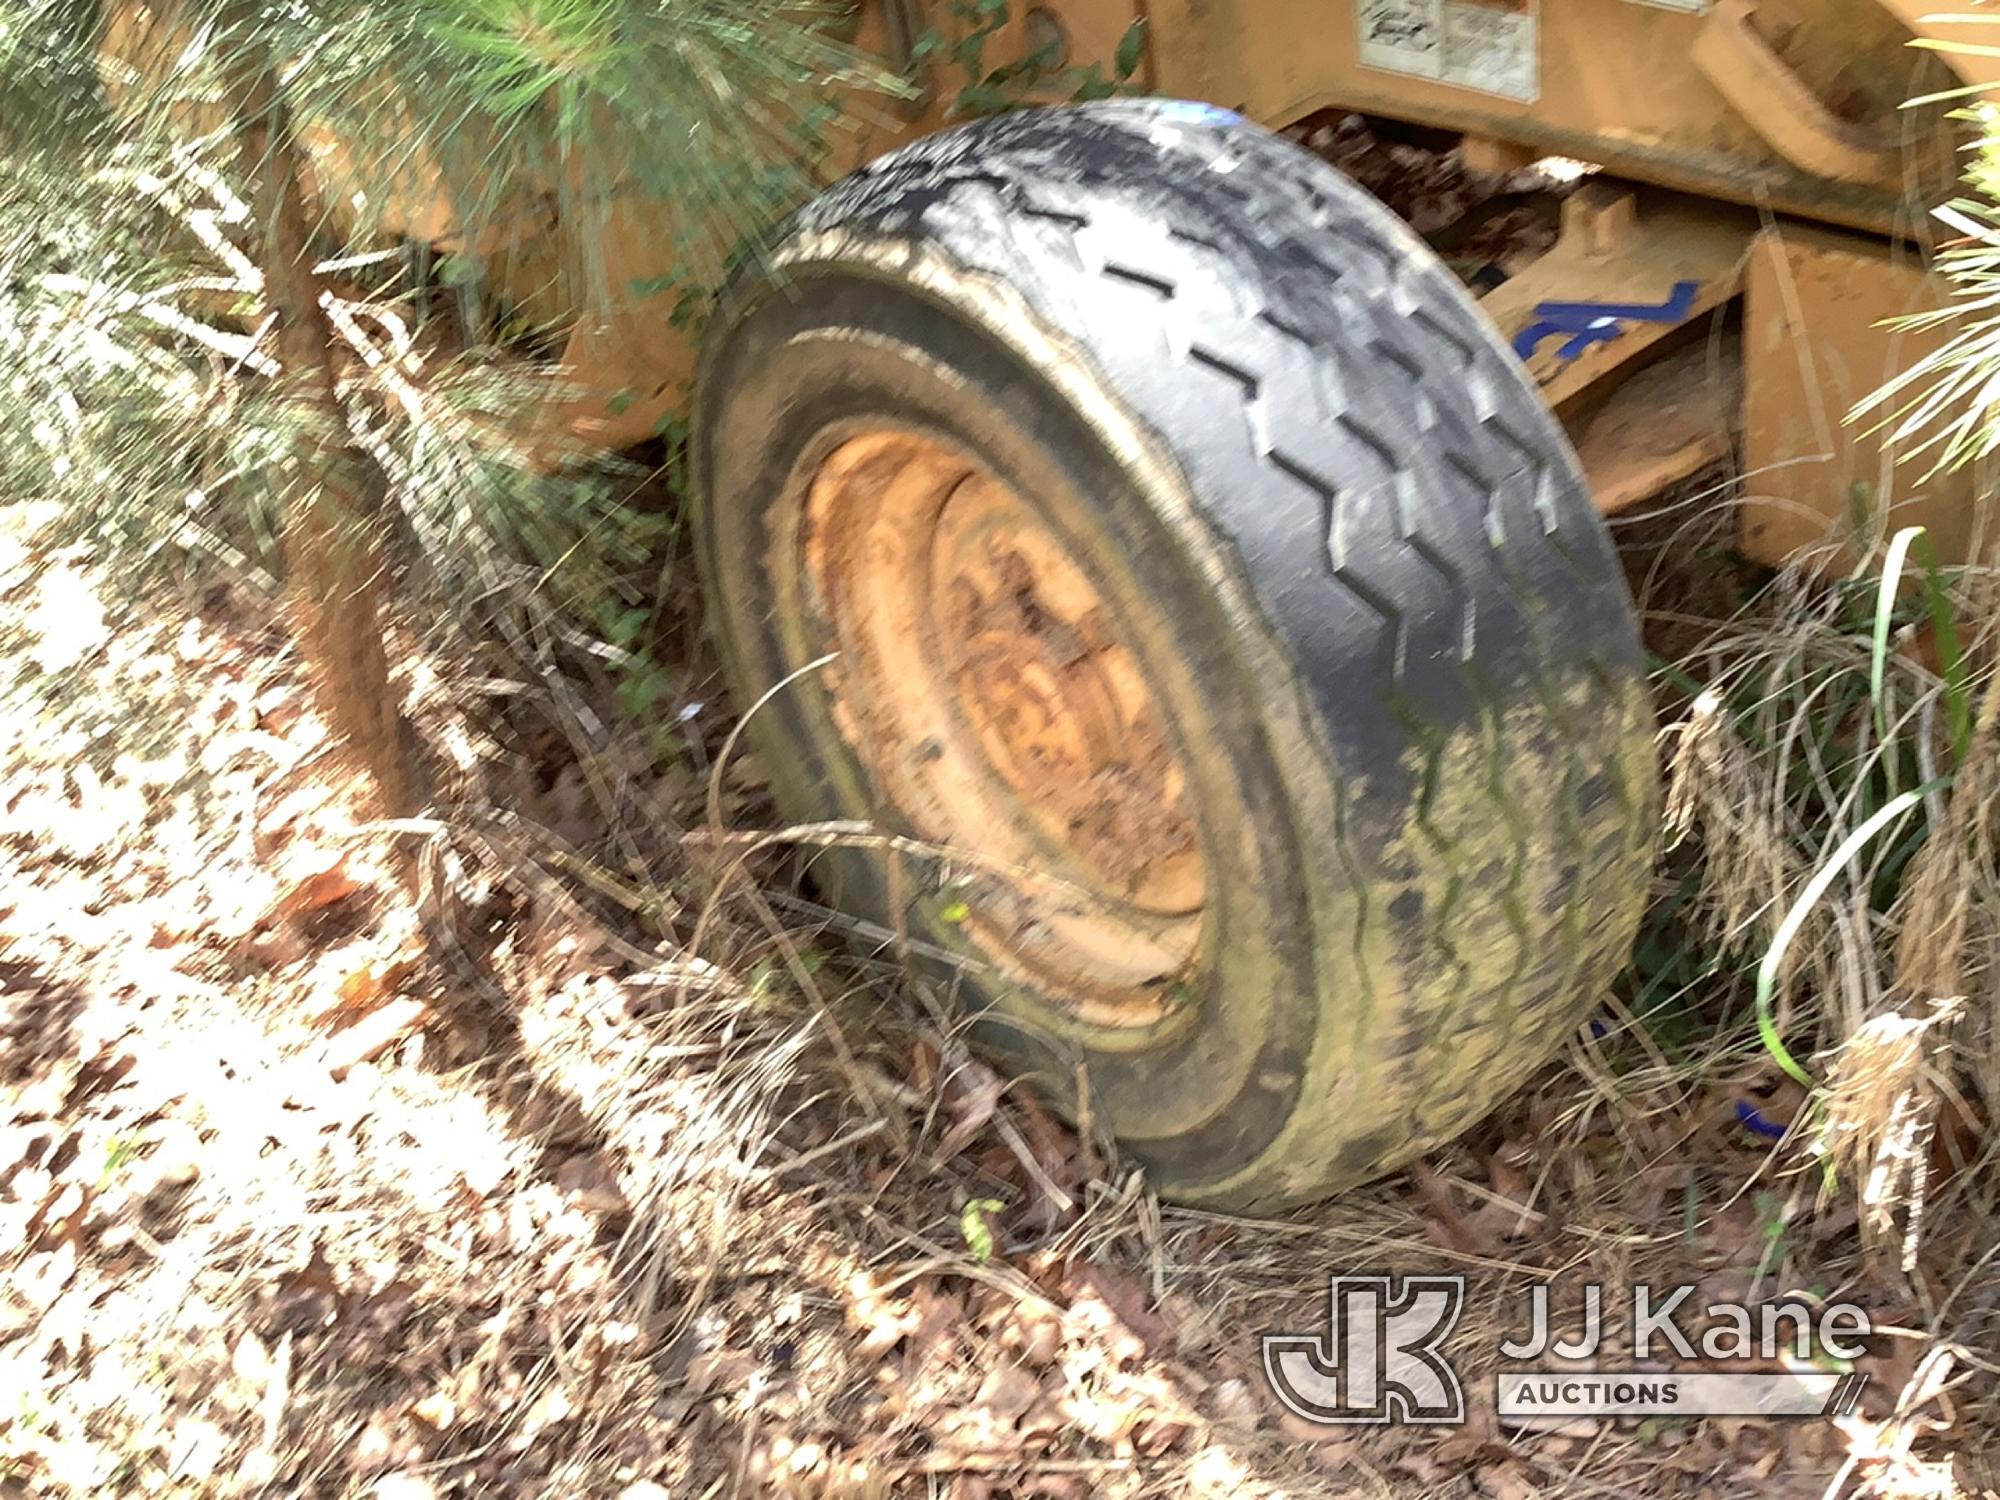 (Douglasville, GA) 2006 Case 580 Super M Series 2 Tractor Loader Backhoe Not Running Condition Unkno